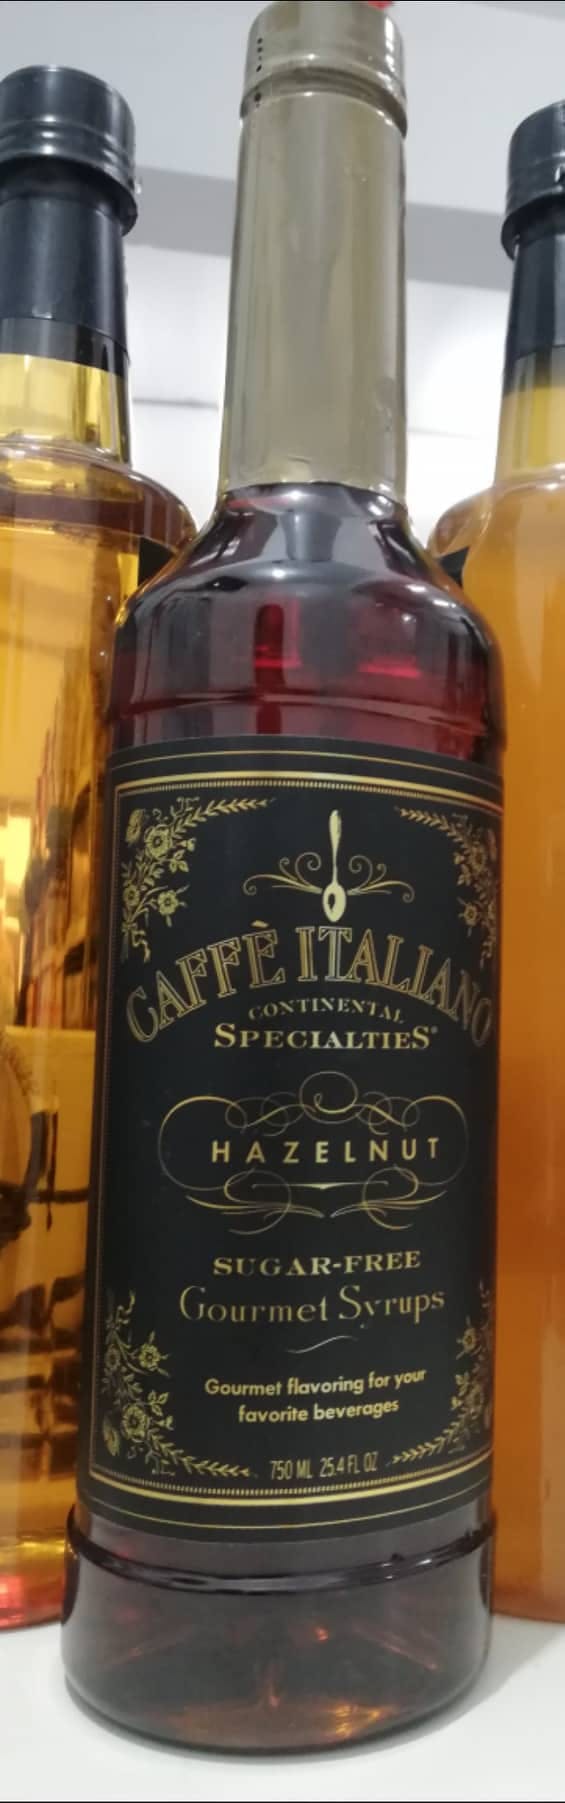 Caffe Italiano Continental Specialties Hazelnut Syrup for Coffee sugar free 750ml